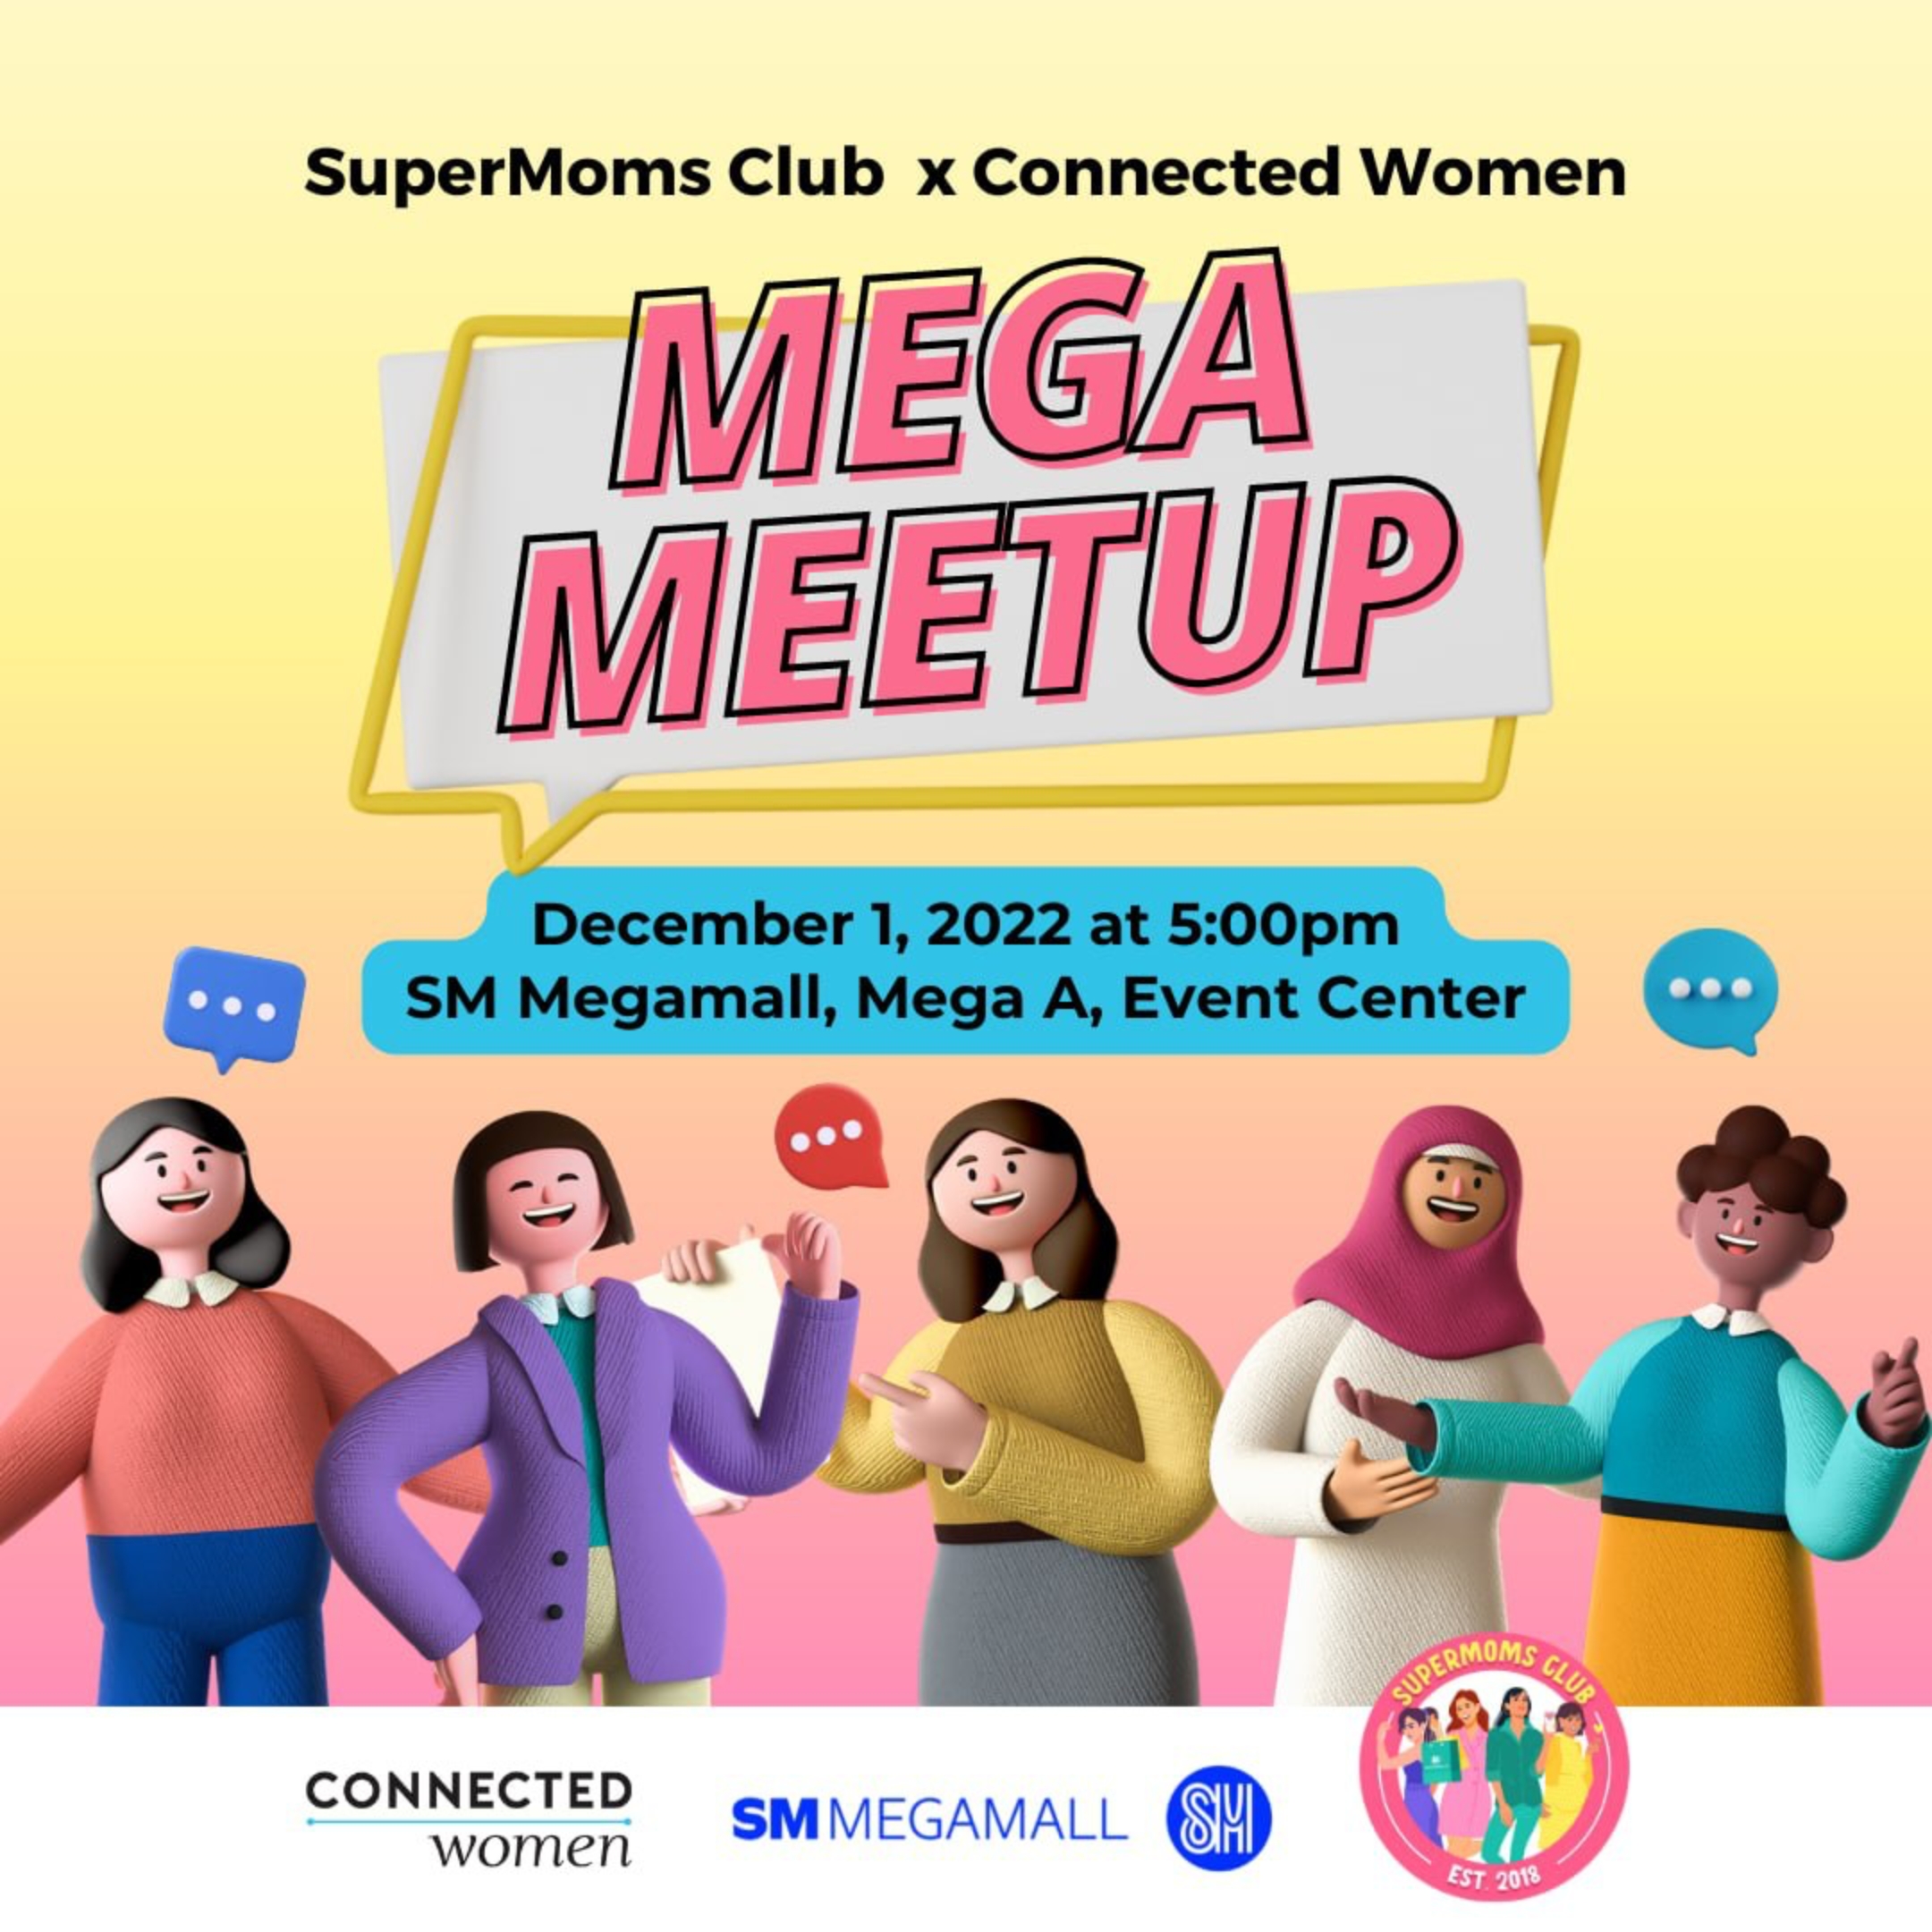 SuperMoms Club x Connected Women MEGA MEETUP Event